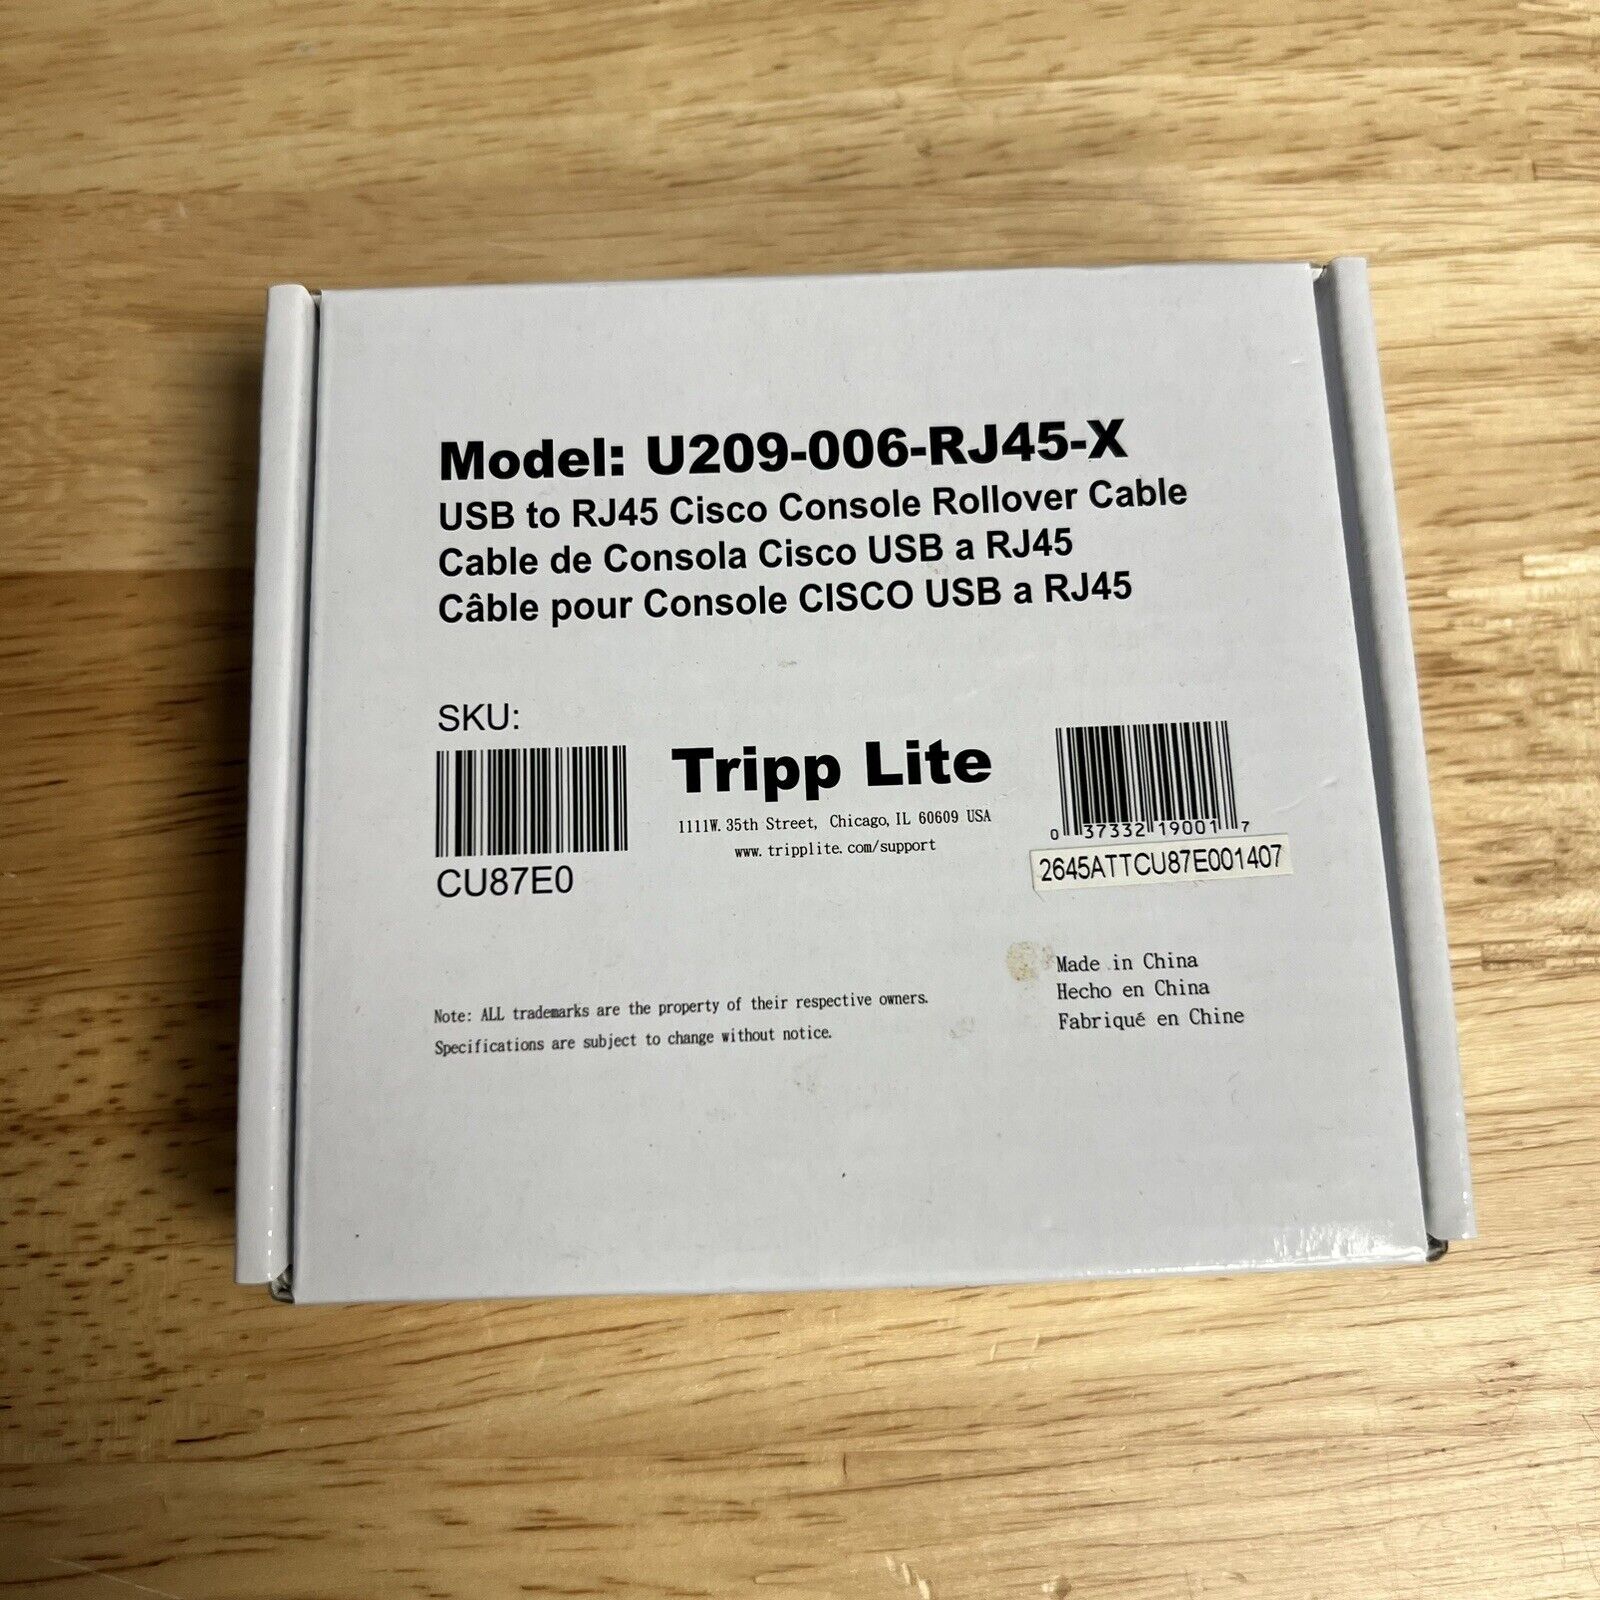 Tripp Lite Usb To Rj45 U209-006-RJ45-X